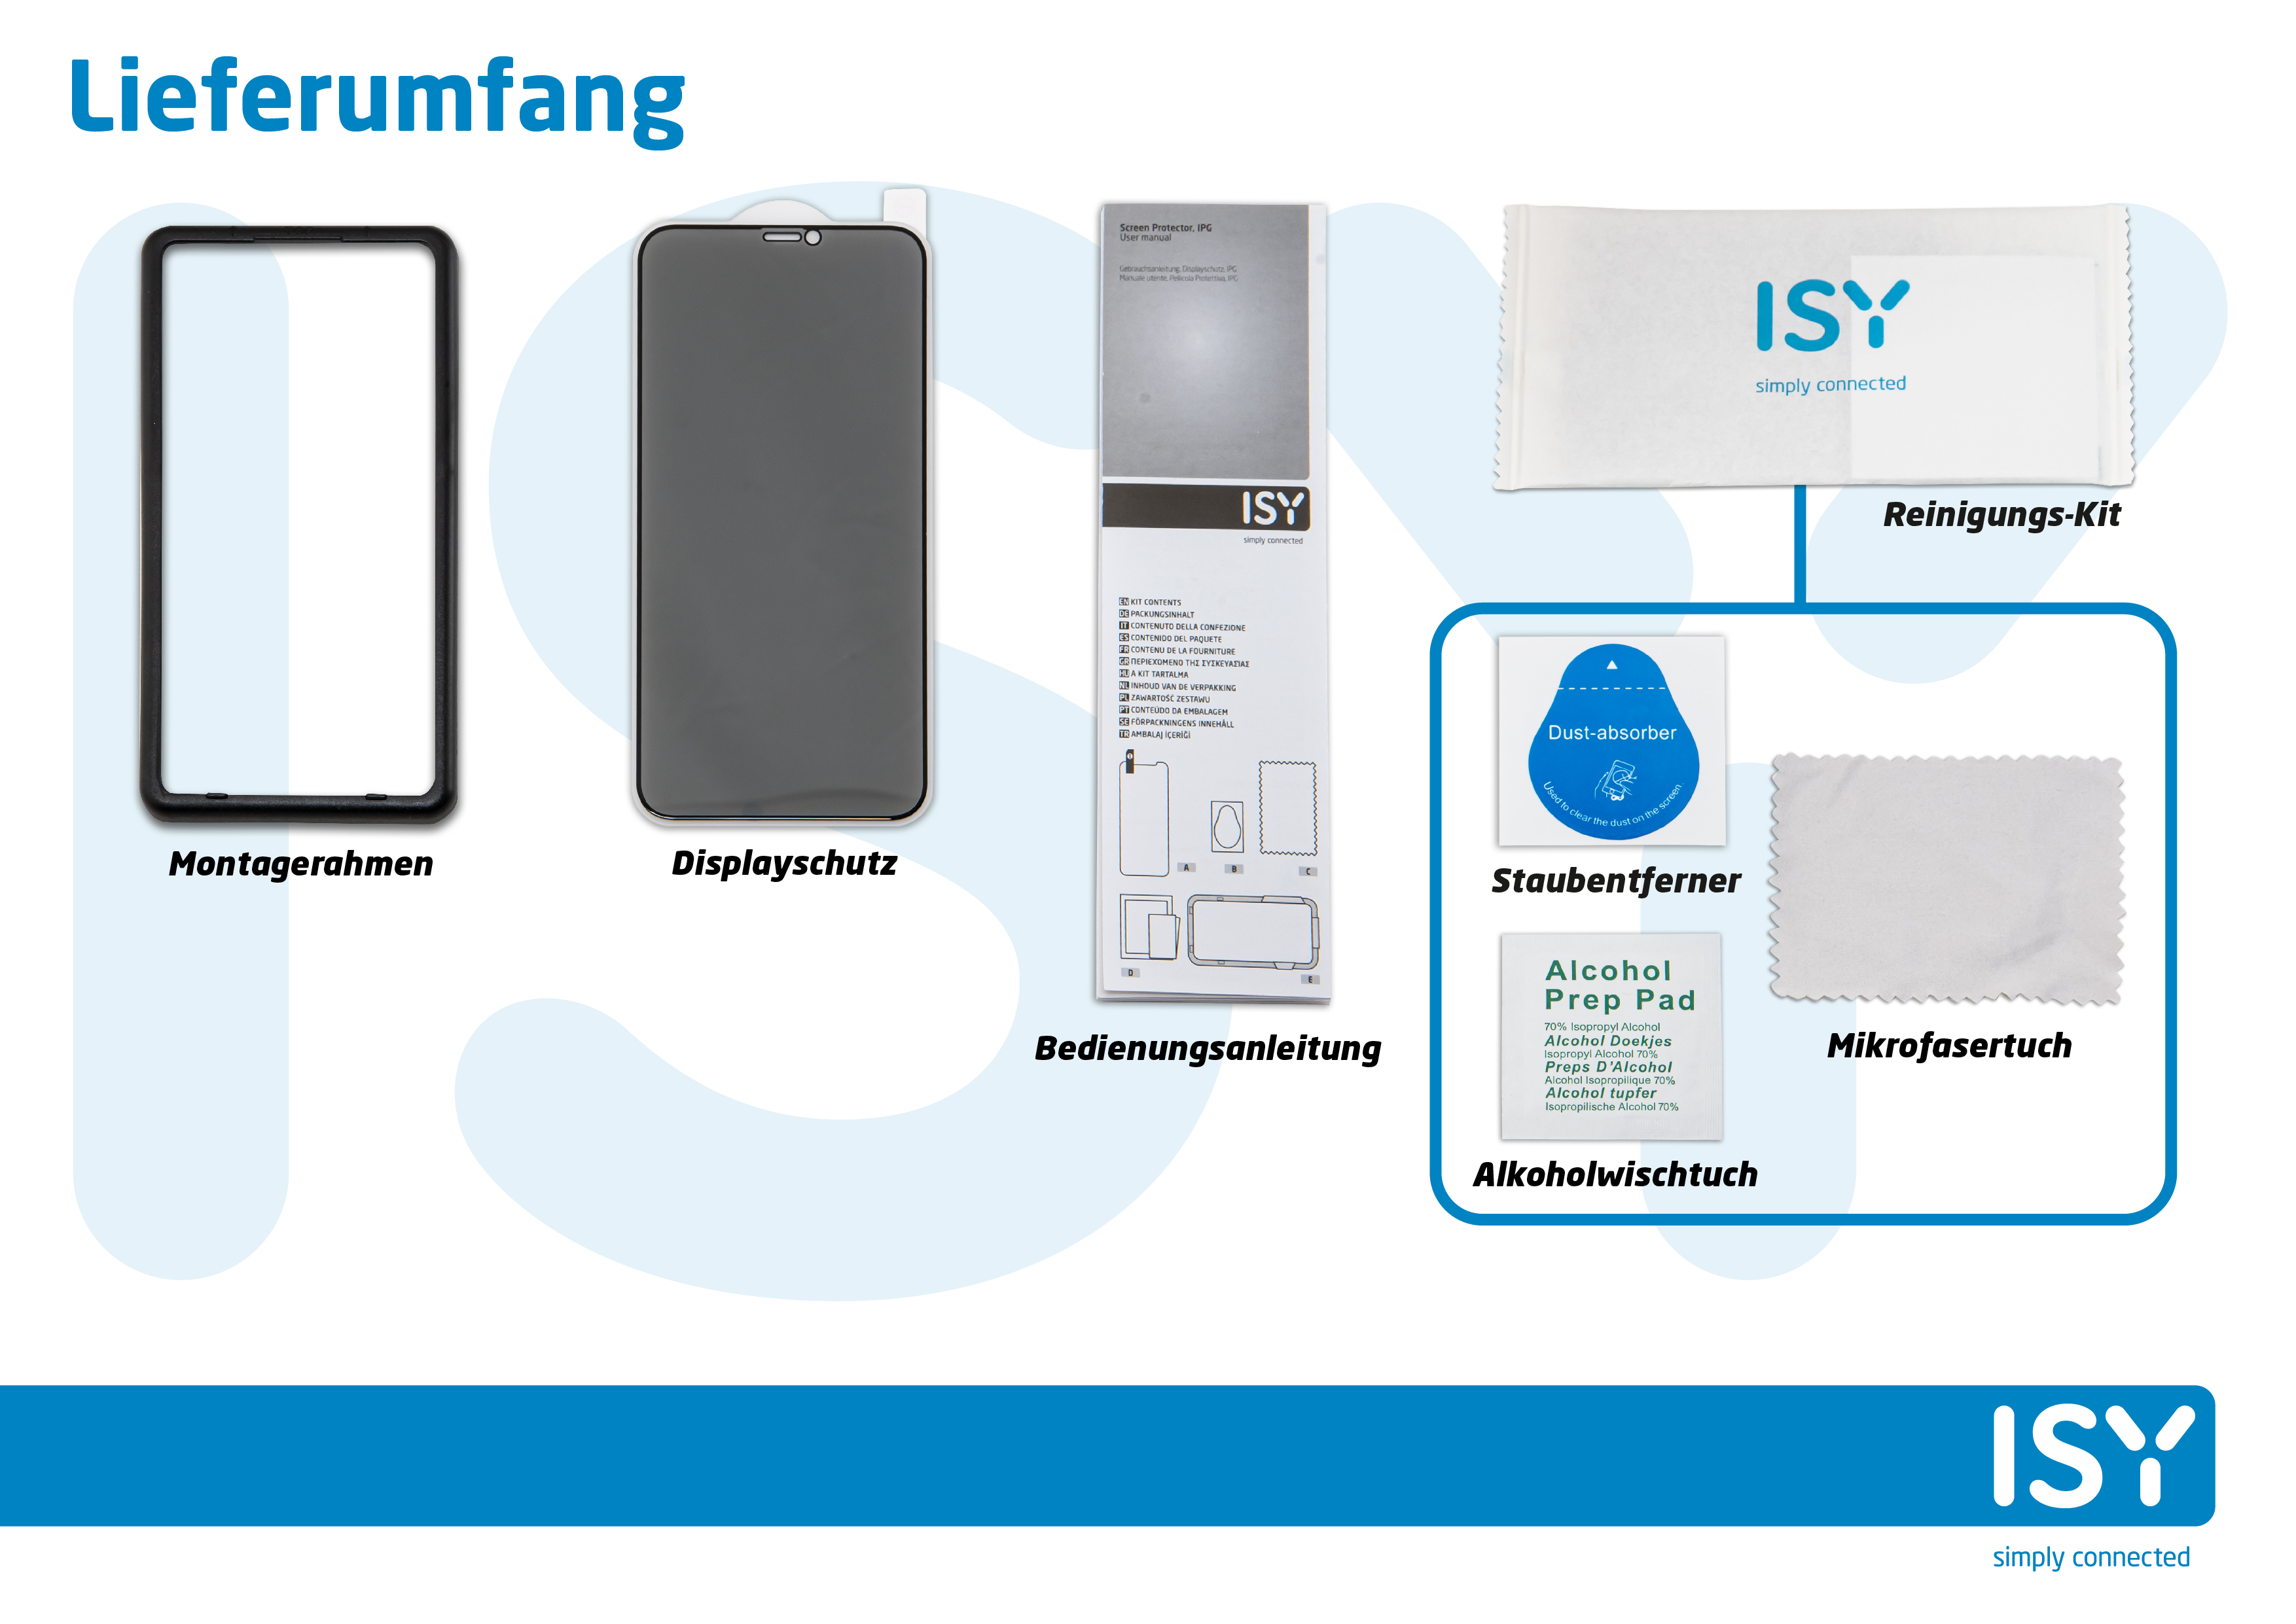 5084-2.5D Galaxy ISY (für A21) Samsung Displayschutz IPG